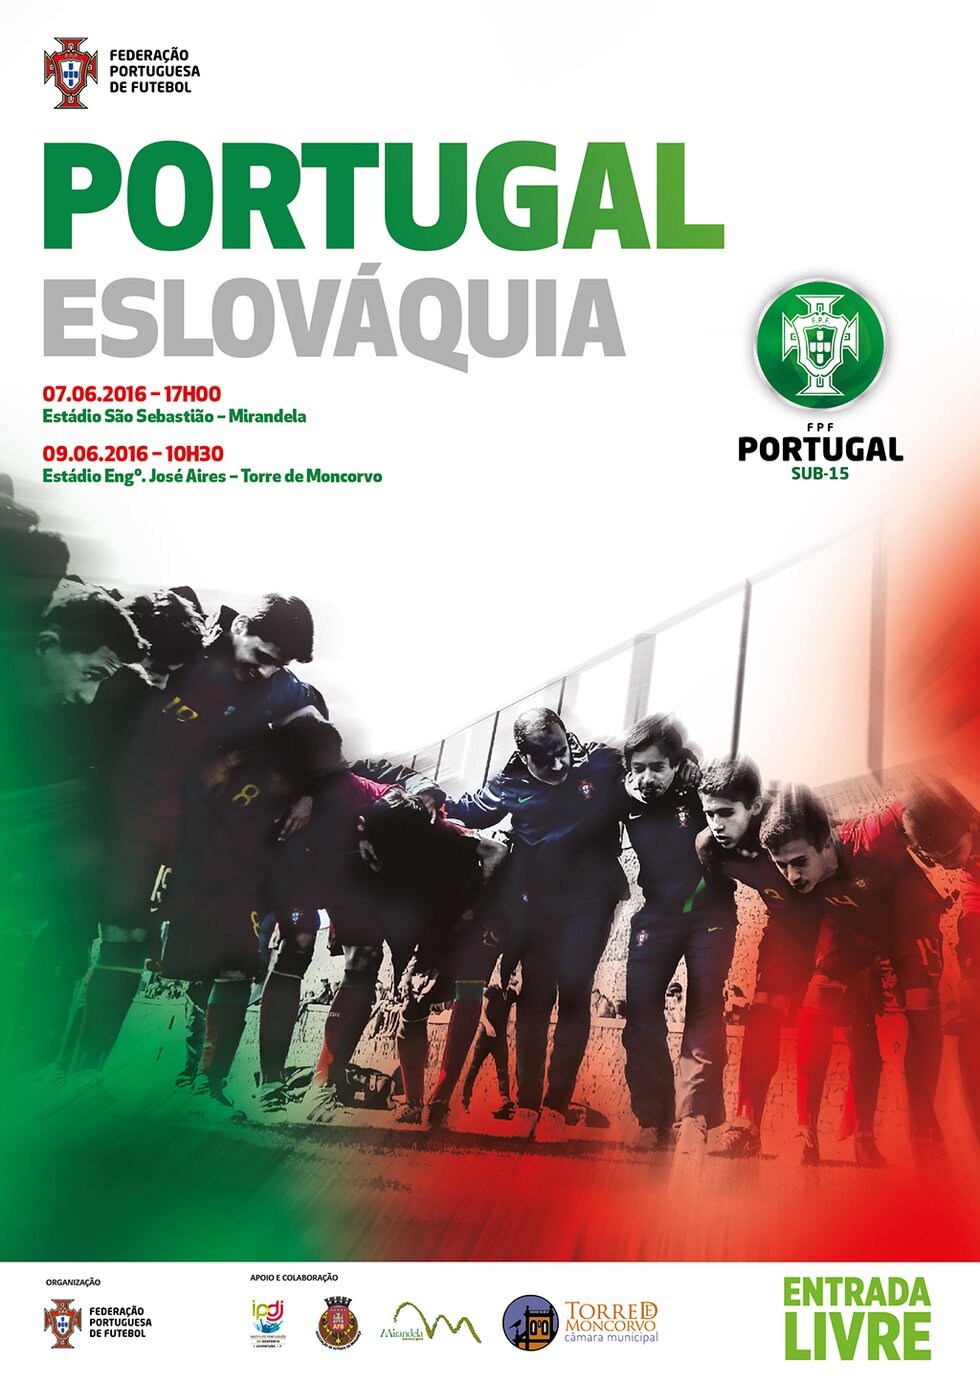 Portugal-ESLOVAQUIA-Poster_1024